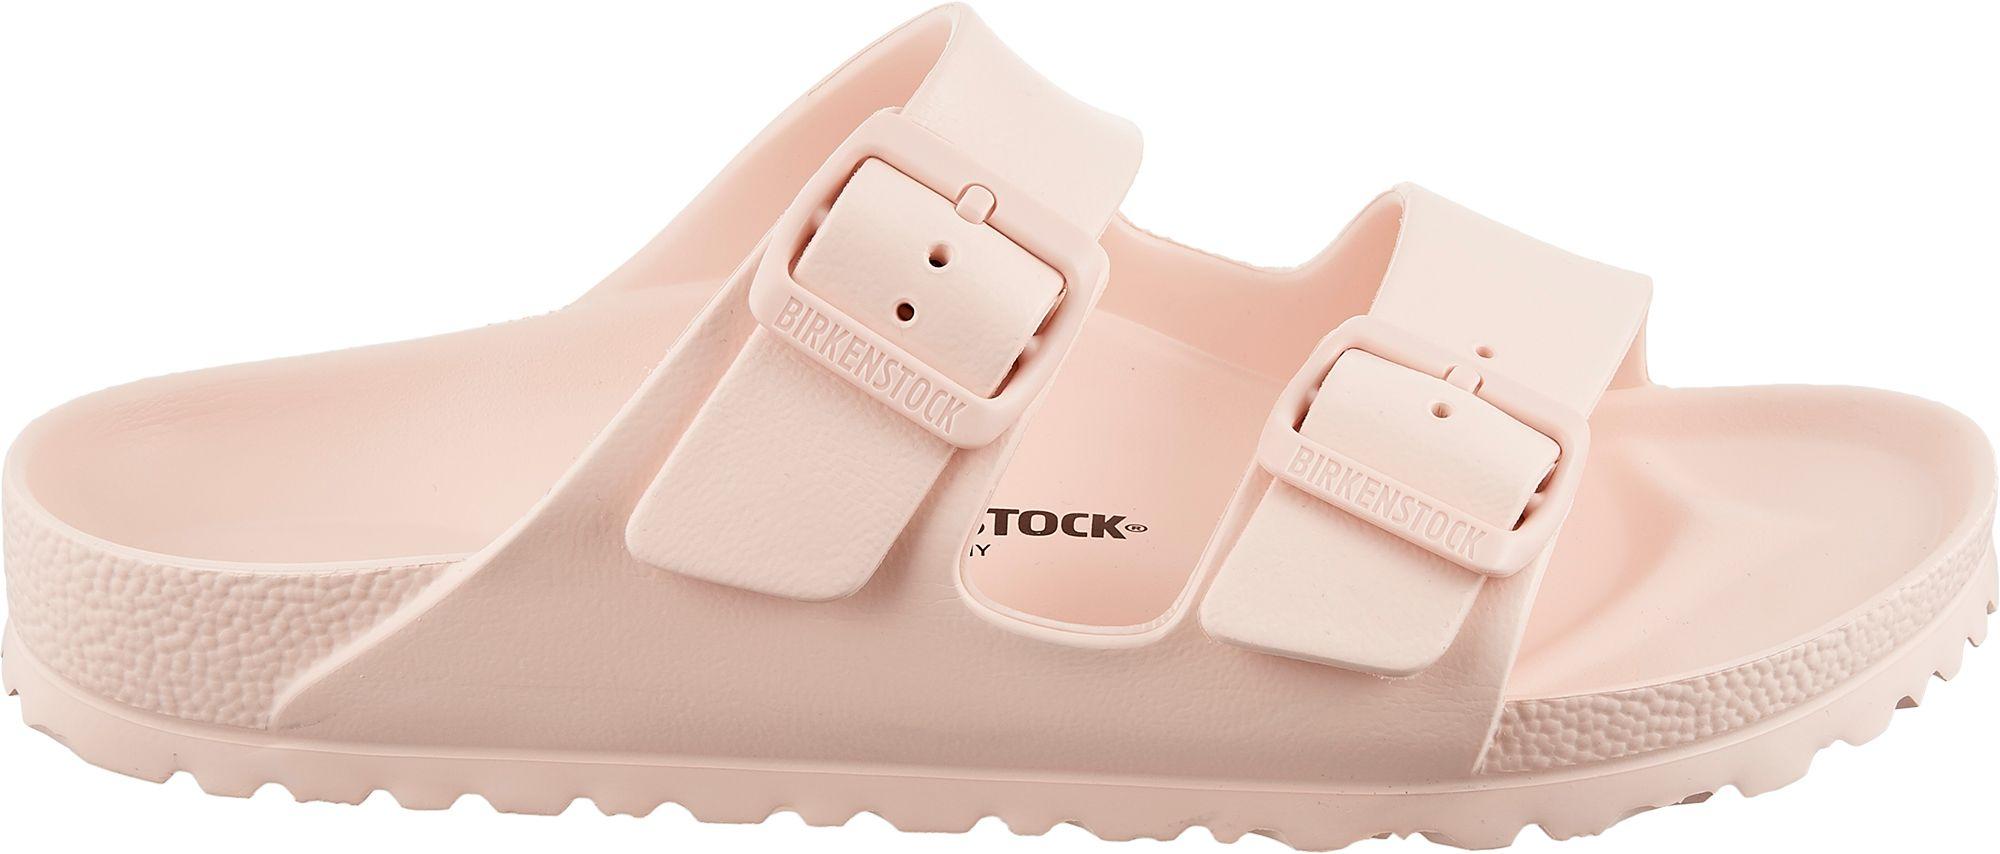 birkenstock women's arizona essentials eva sandals rose